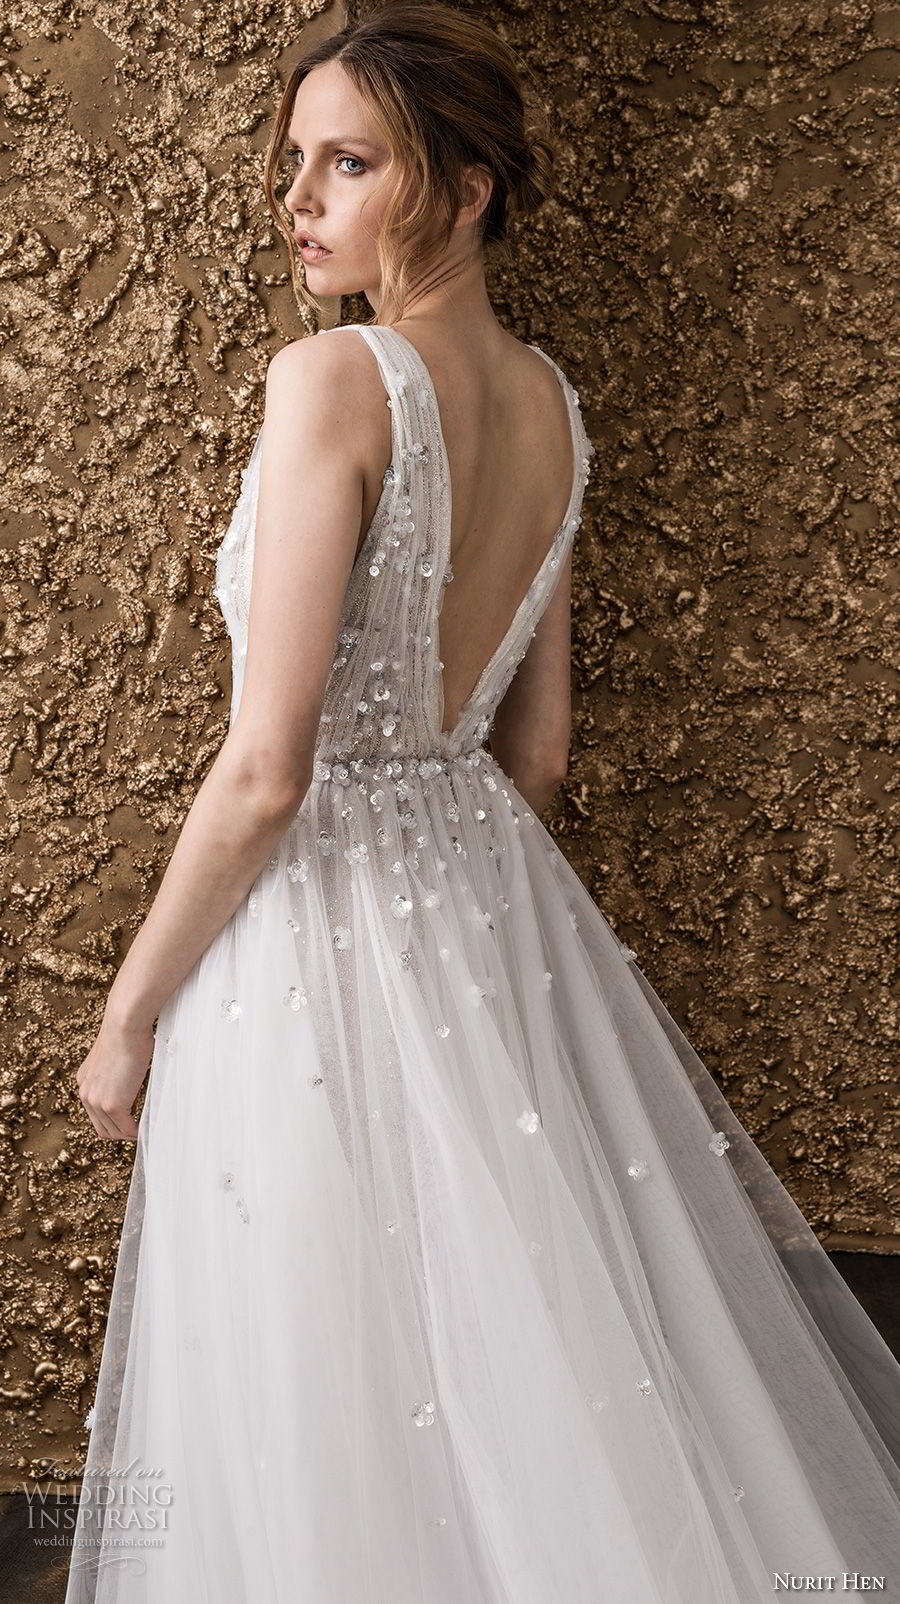 Nurit Hen 2018 Wedding Dresses — “Golden Touch” Bridal Collection ...